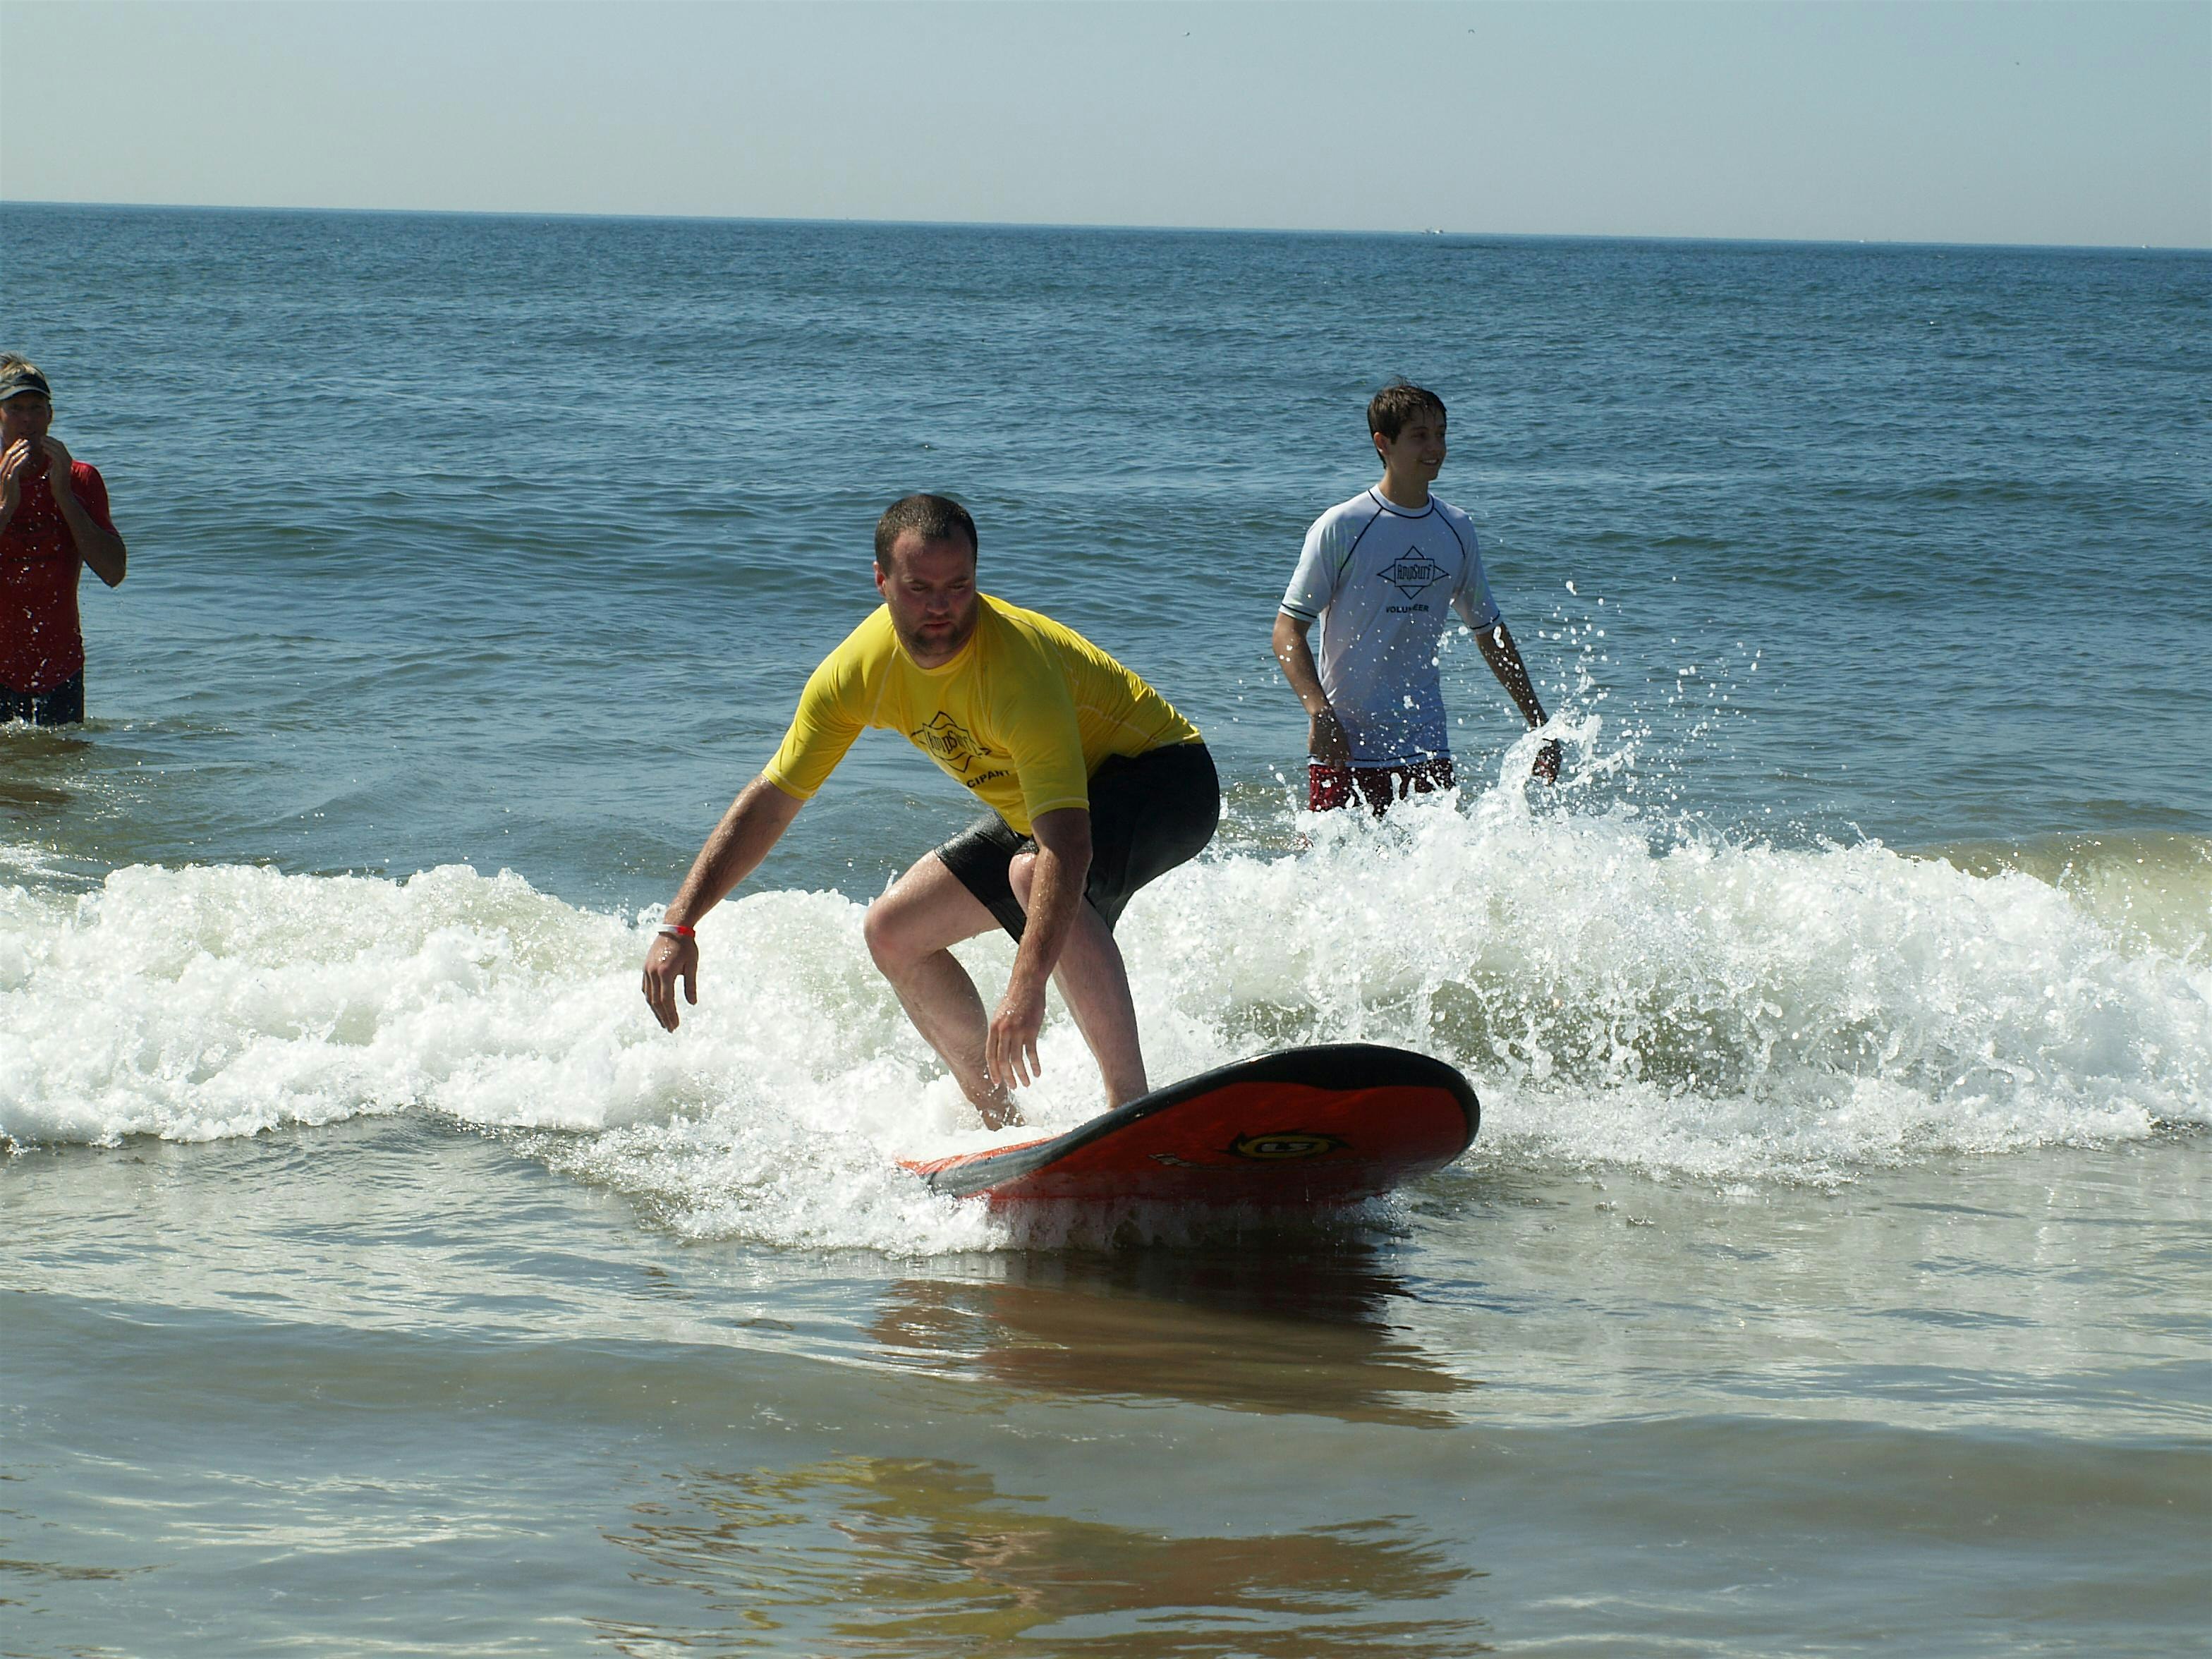 AmpSurf NY, Learn to Surf Clinic, July 27th, Rockaway Beach, New York